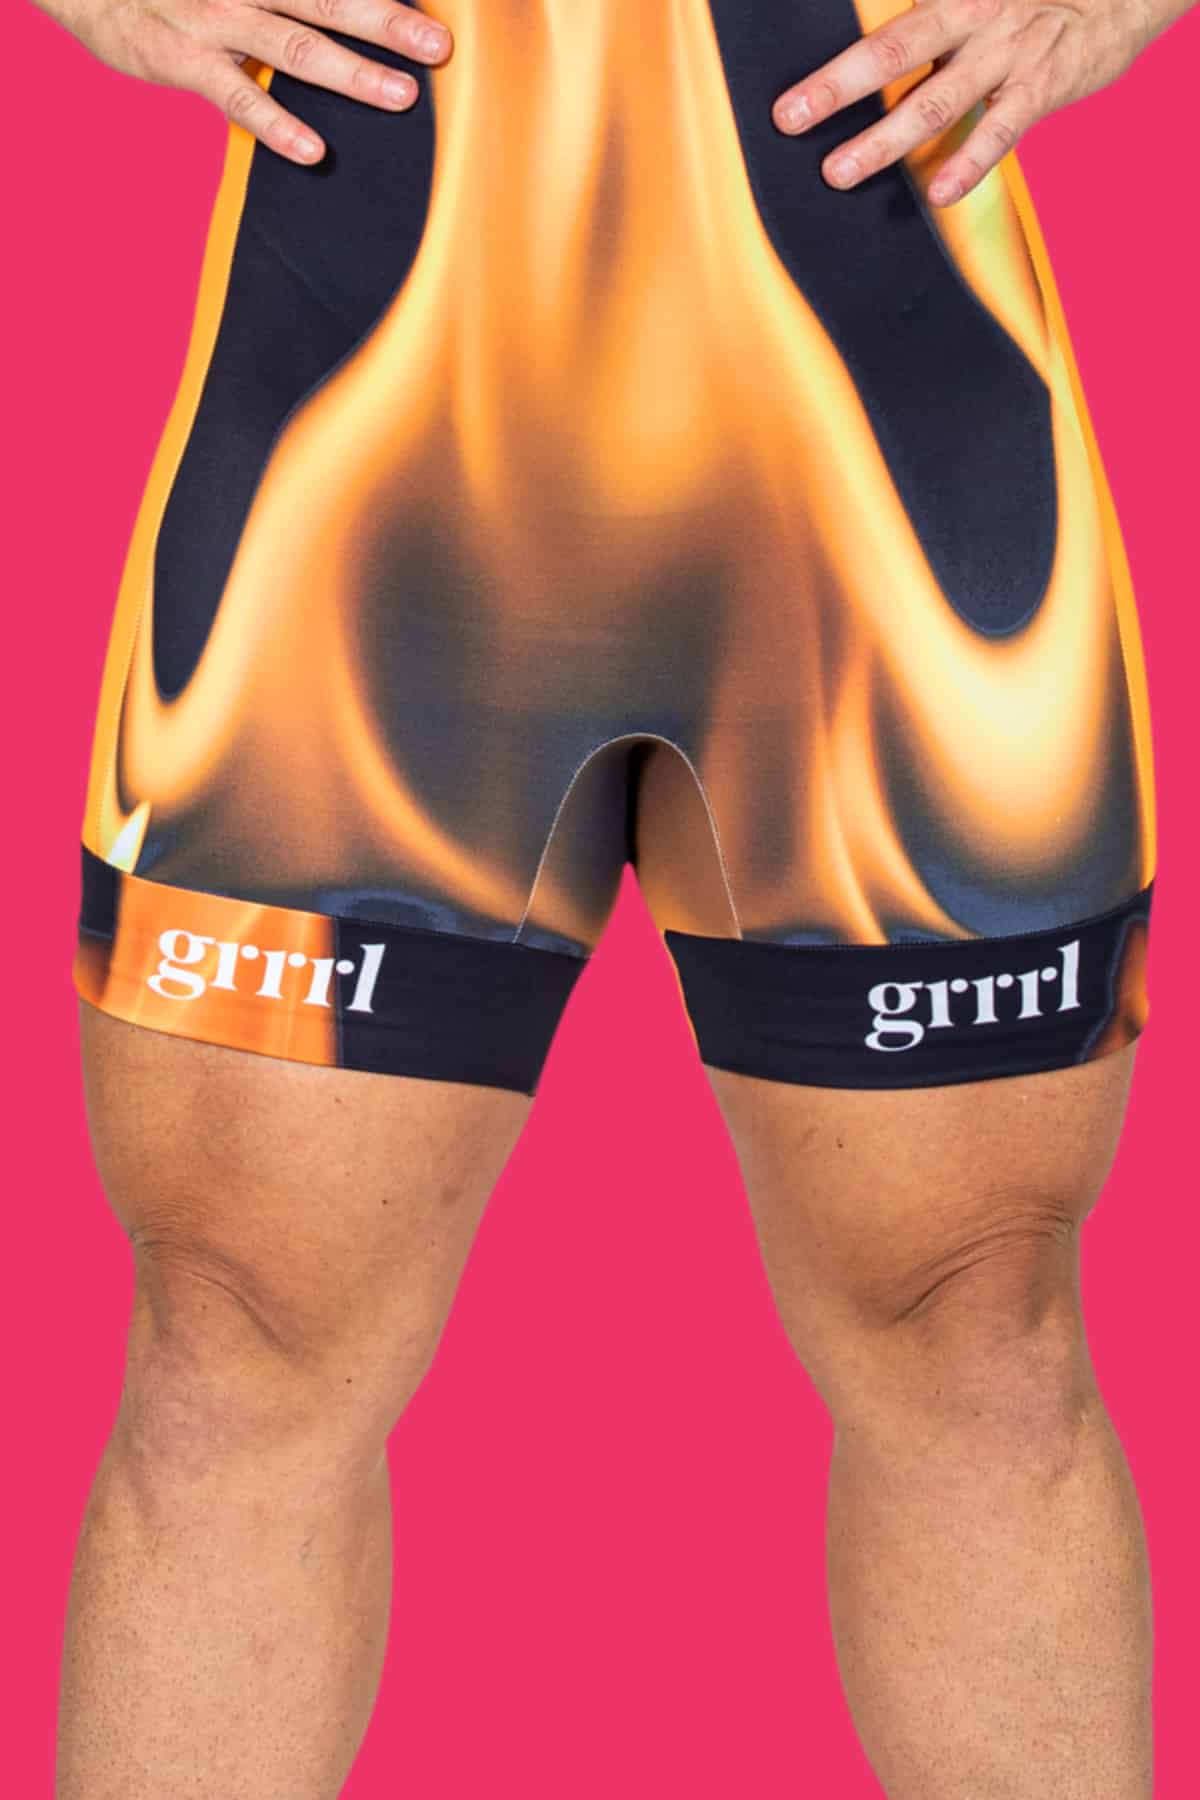 GRRRL On Fire Next Level Singlet - Limited Edition Pre-Sale